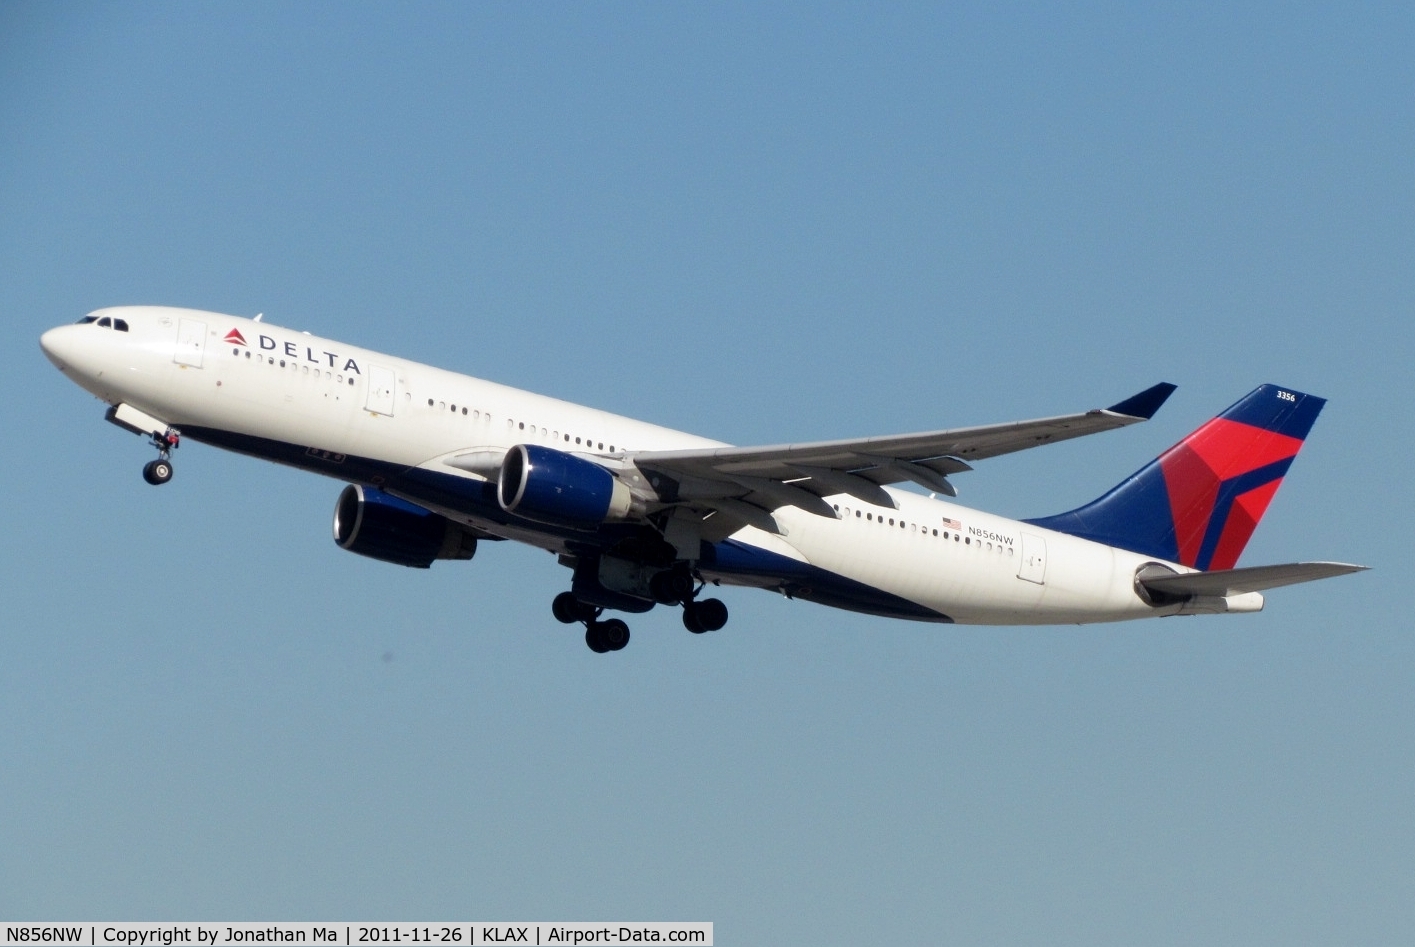 N856NW, 2004 Airbus A330-223 C/N 0631, N856NW and N855NW departed LAX